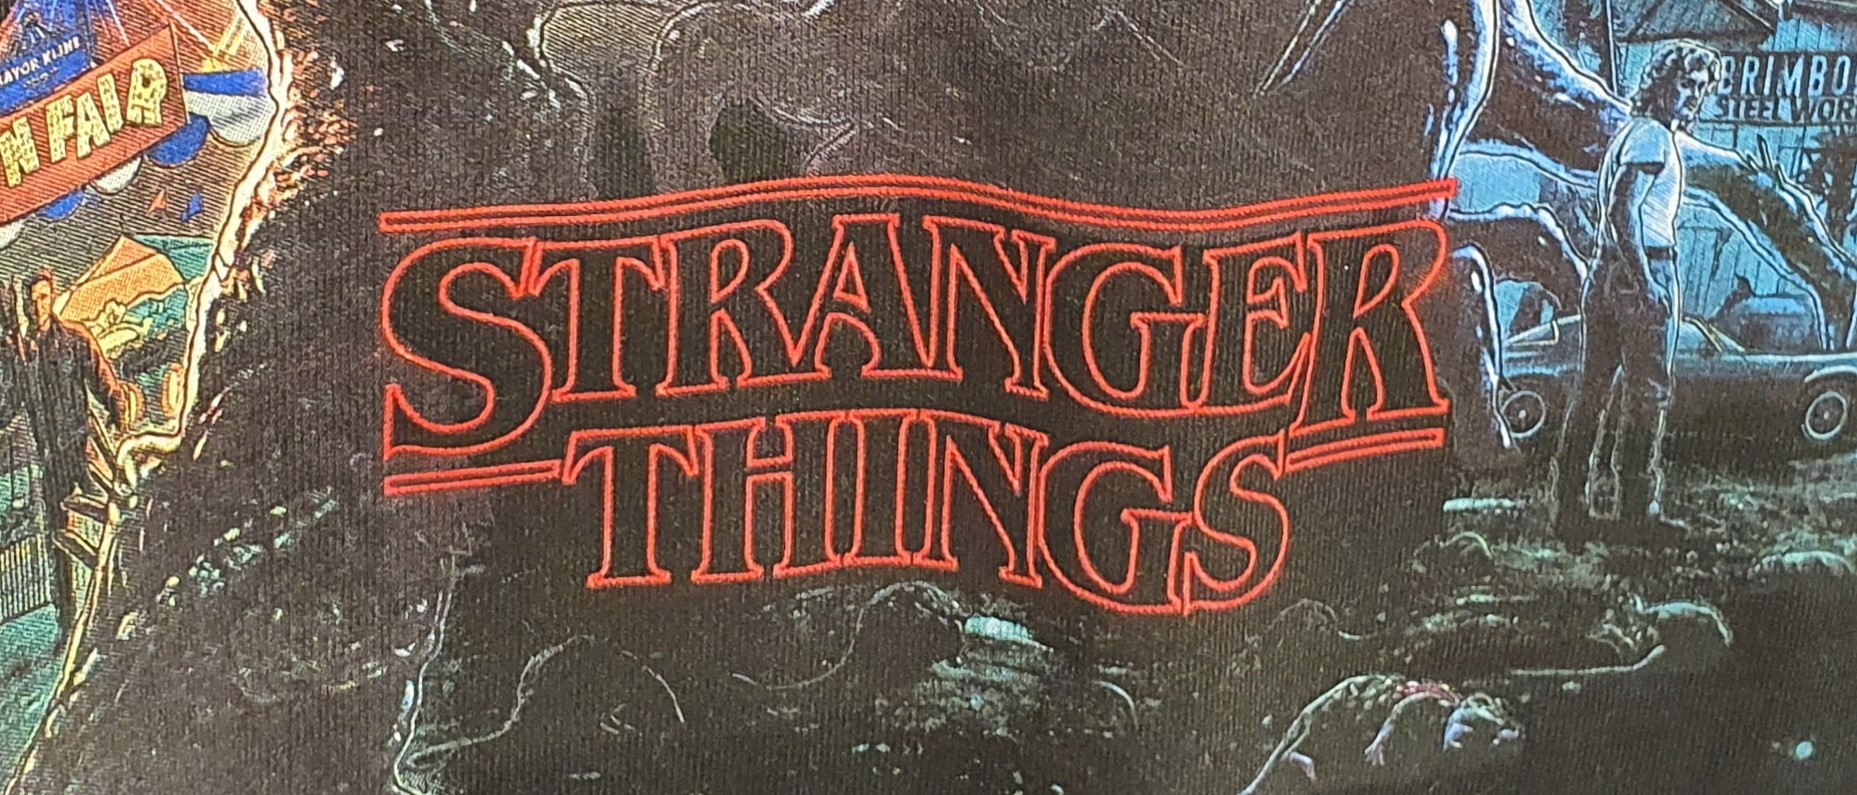 'Stranger Things' T-shirt design featuring the striking red logo